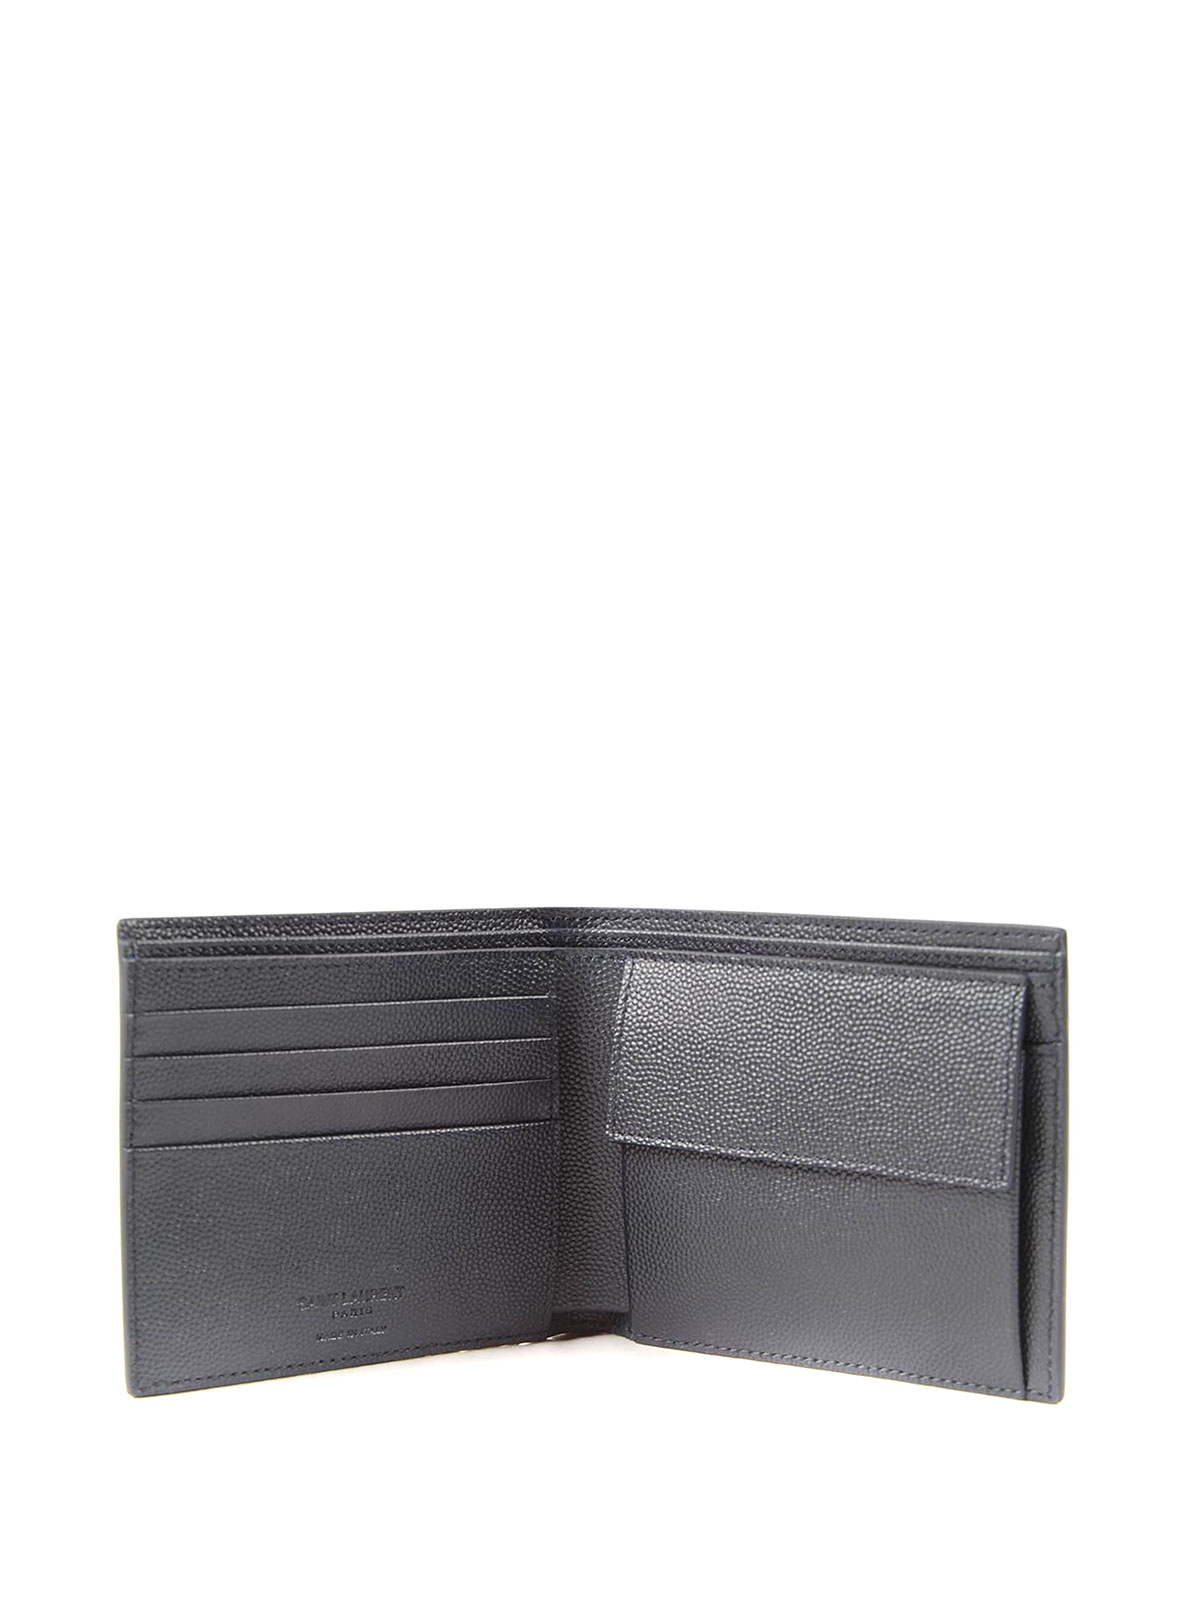 Saint Laurent Hammered Leather Wallet